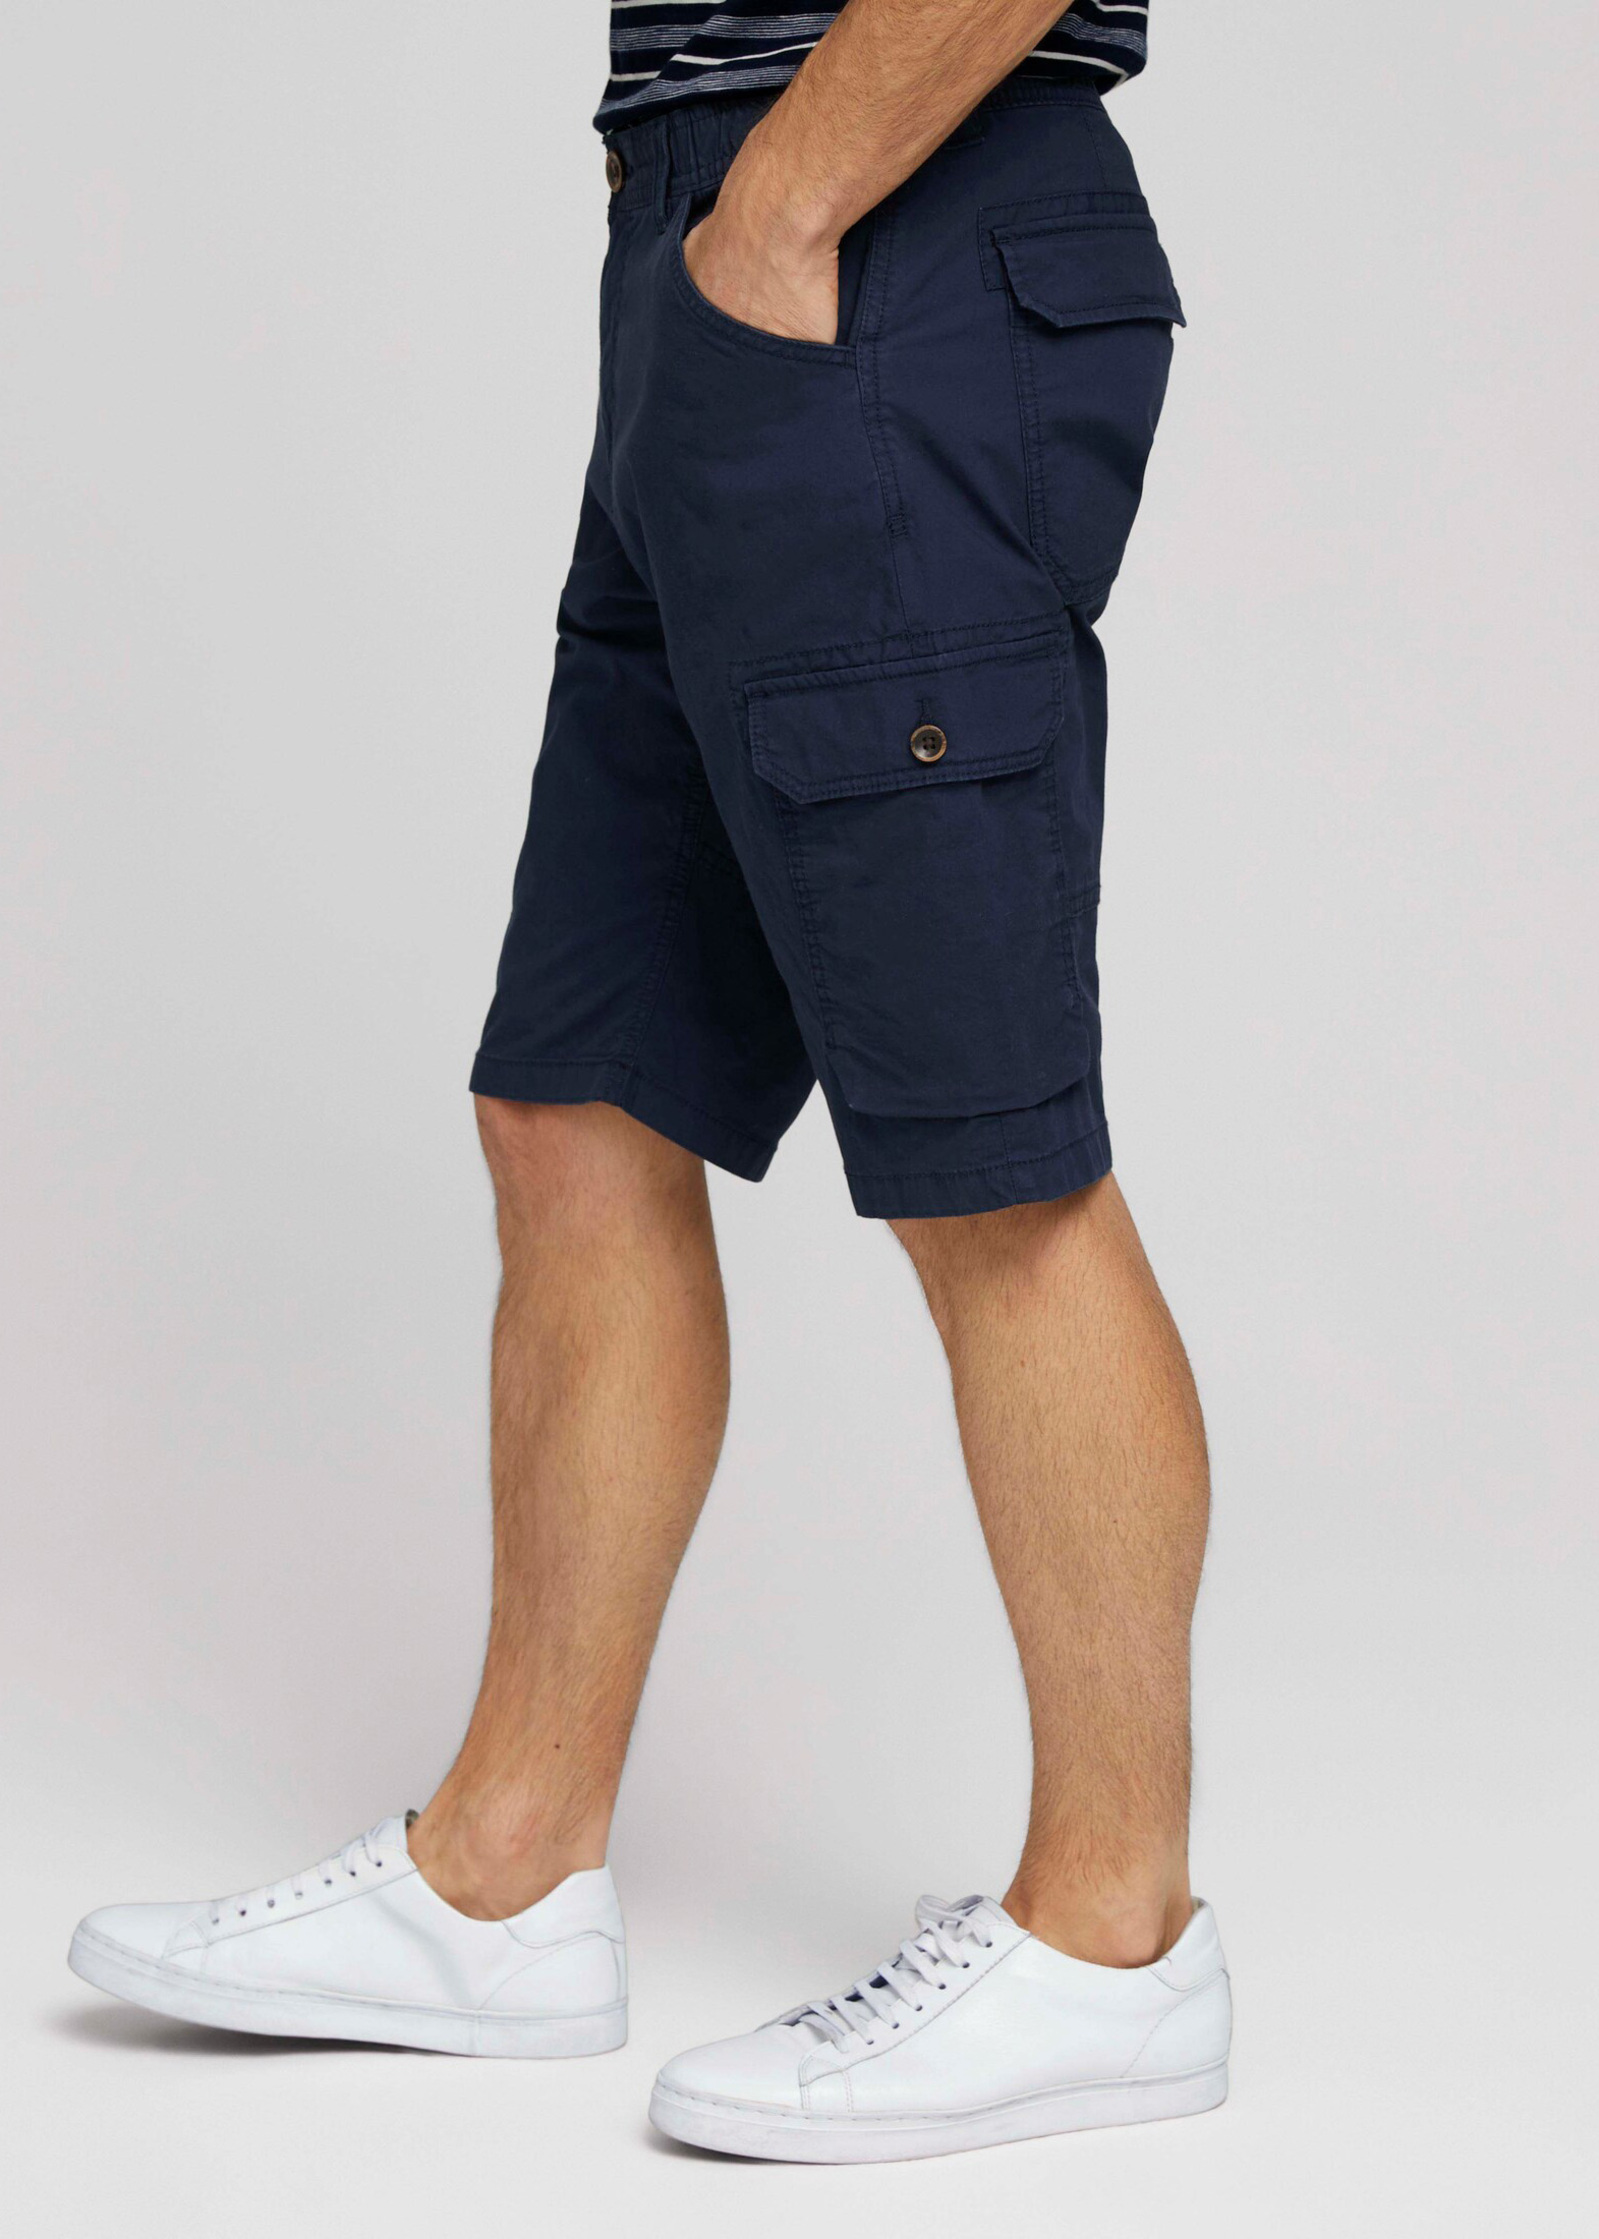 Tom Tailor Lightweight Shorts Size - 1026090-10932 Blue Sailor Cargo S